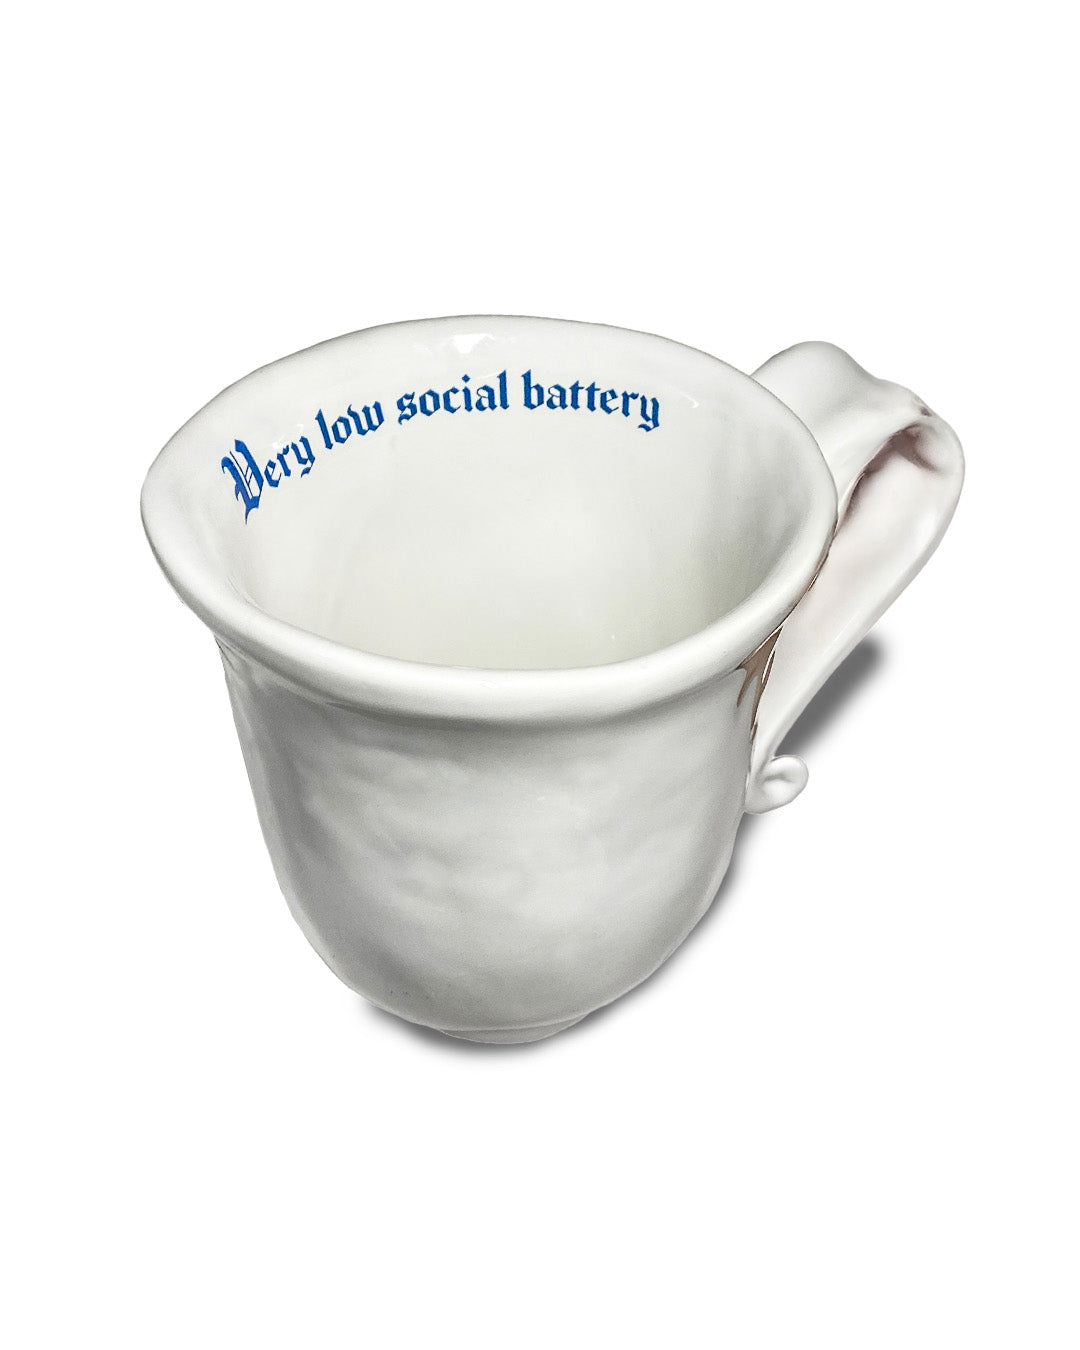 "Very low social battery" Sassy Mug